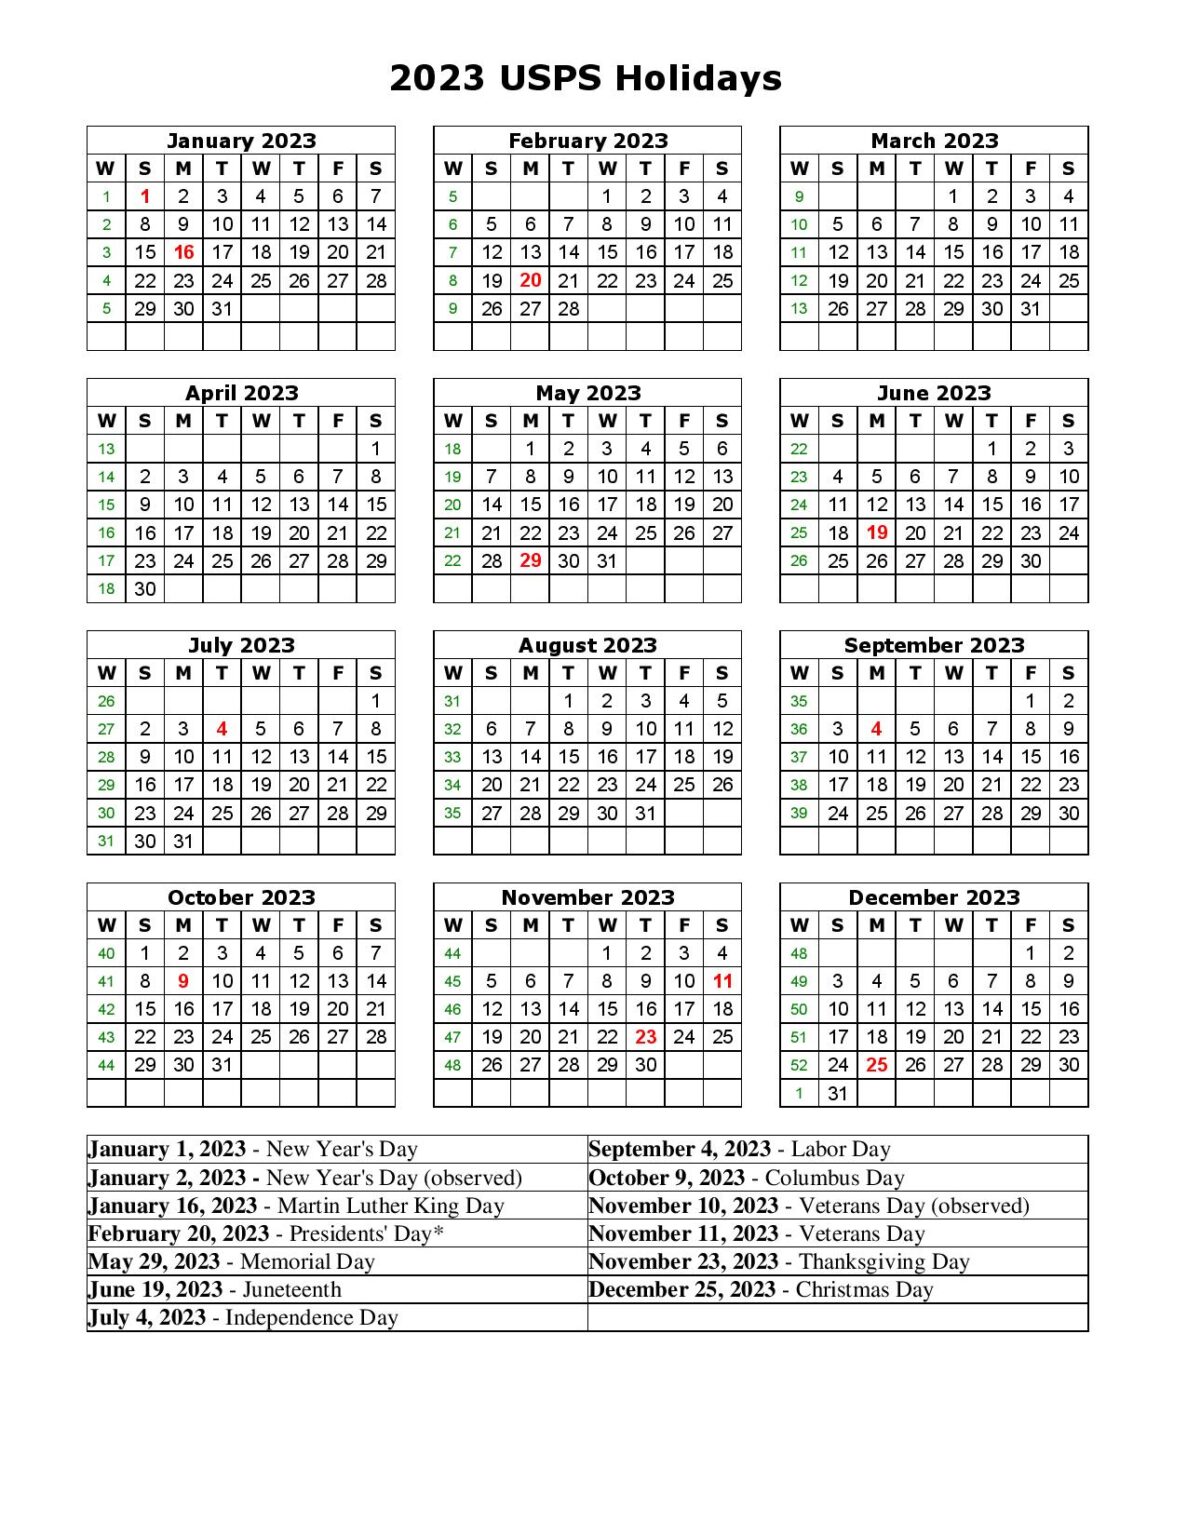 usps-holidays-2023-usa-usps-calendar-2023-with-holidays-pelajaran